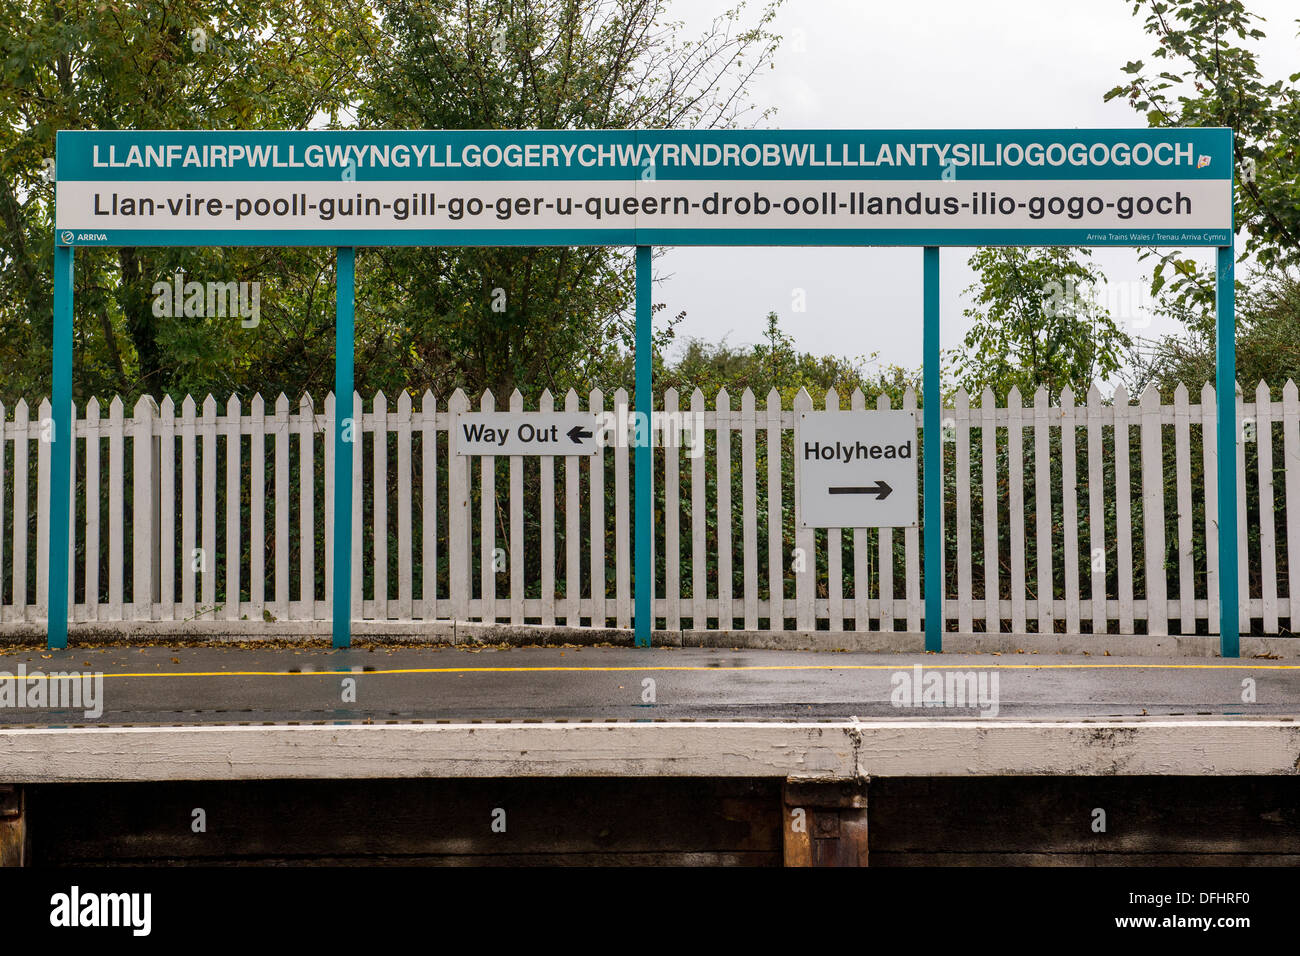 Llanfairpwllgwyngyllgogerychwyrndrobwllllantysiliogogogoch train station, in the village with the longest place name in Europe. Stock Photo